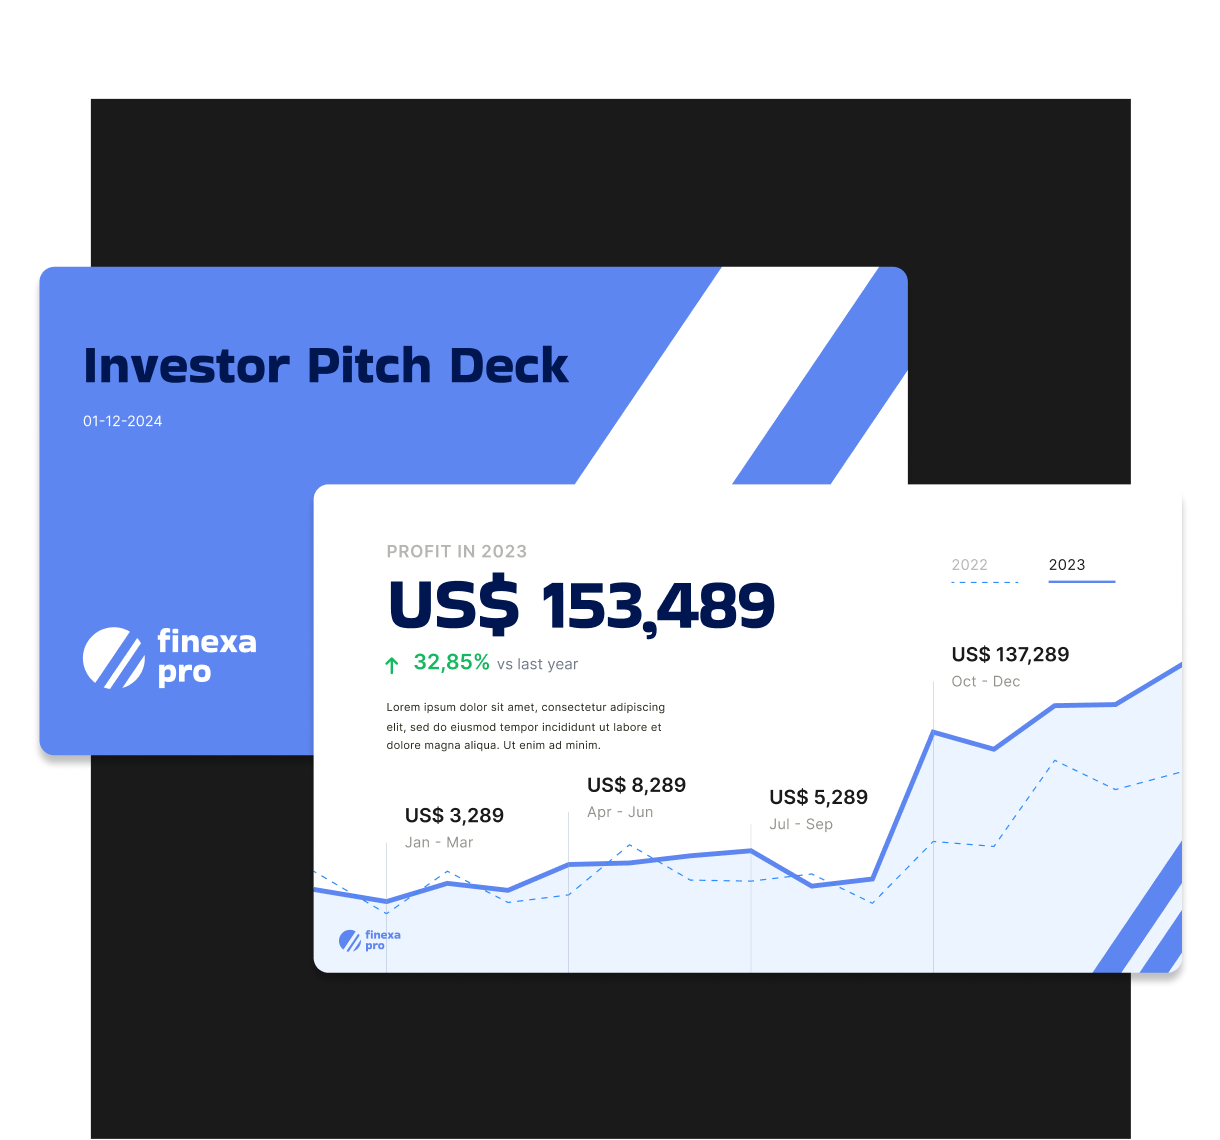 Investor pitch deck